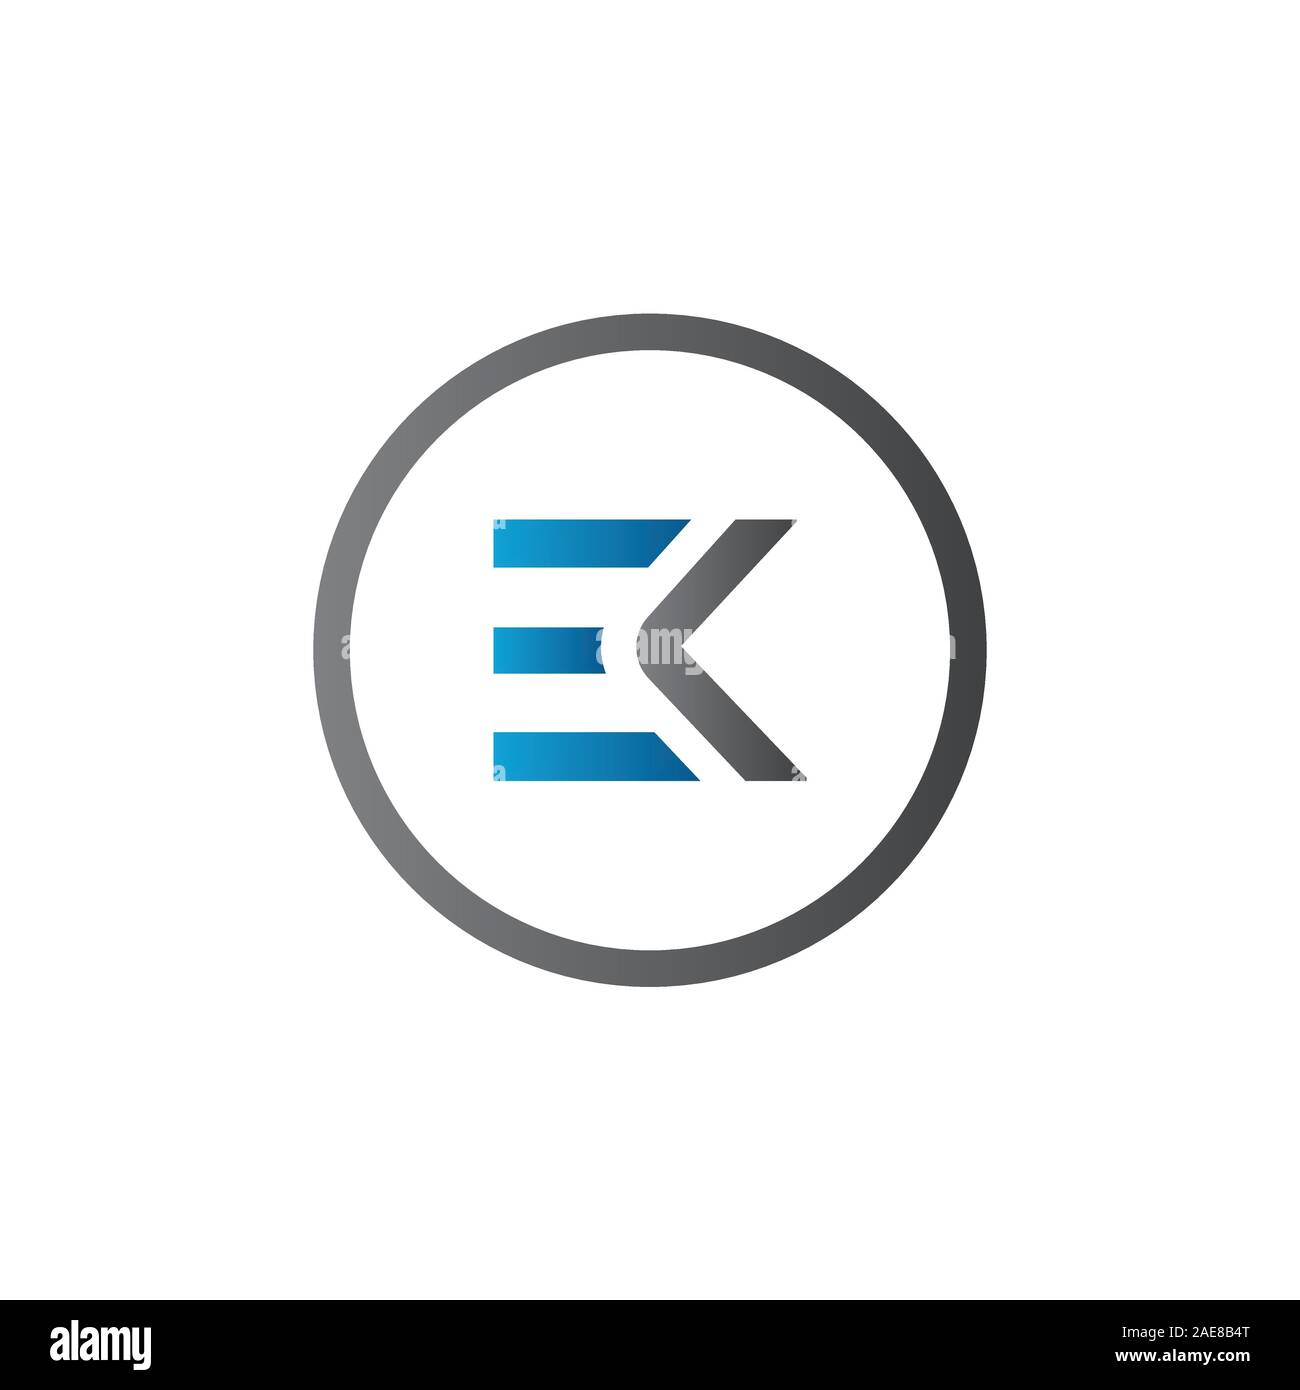 Logo ek hi-res stock photography and images - Alamy